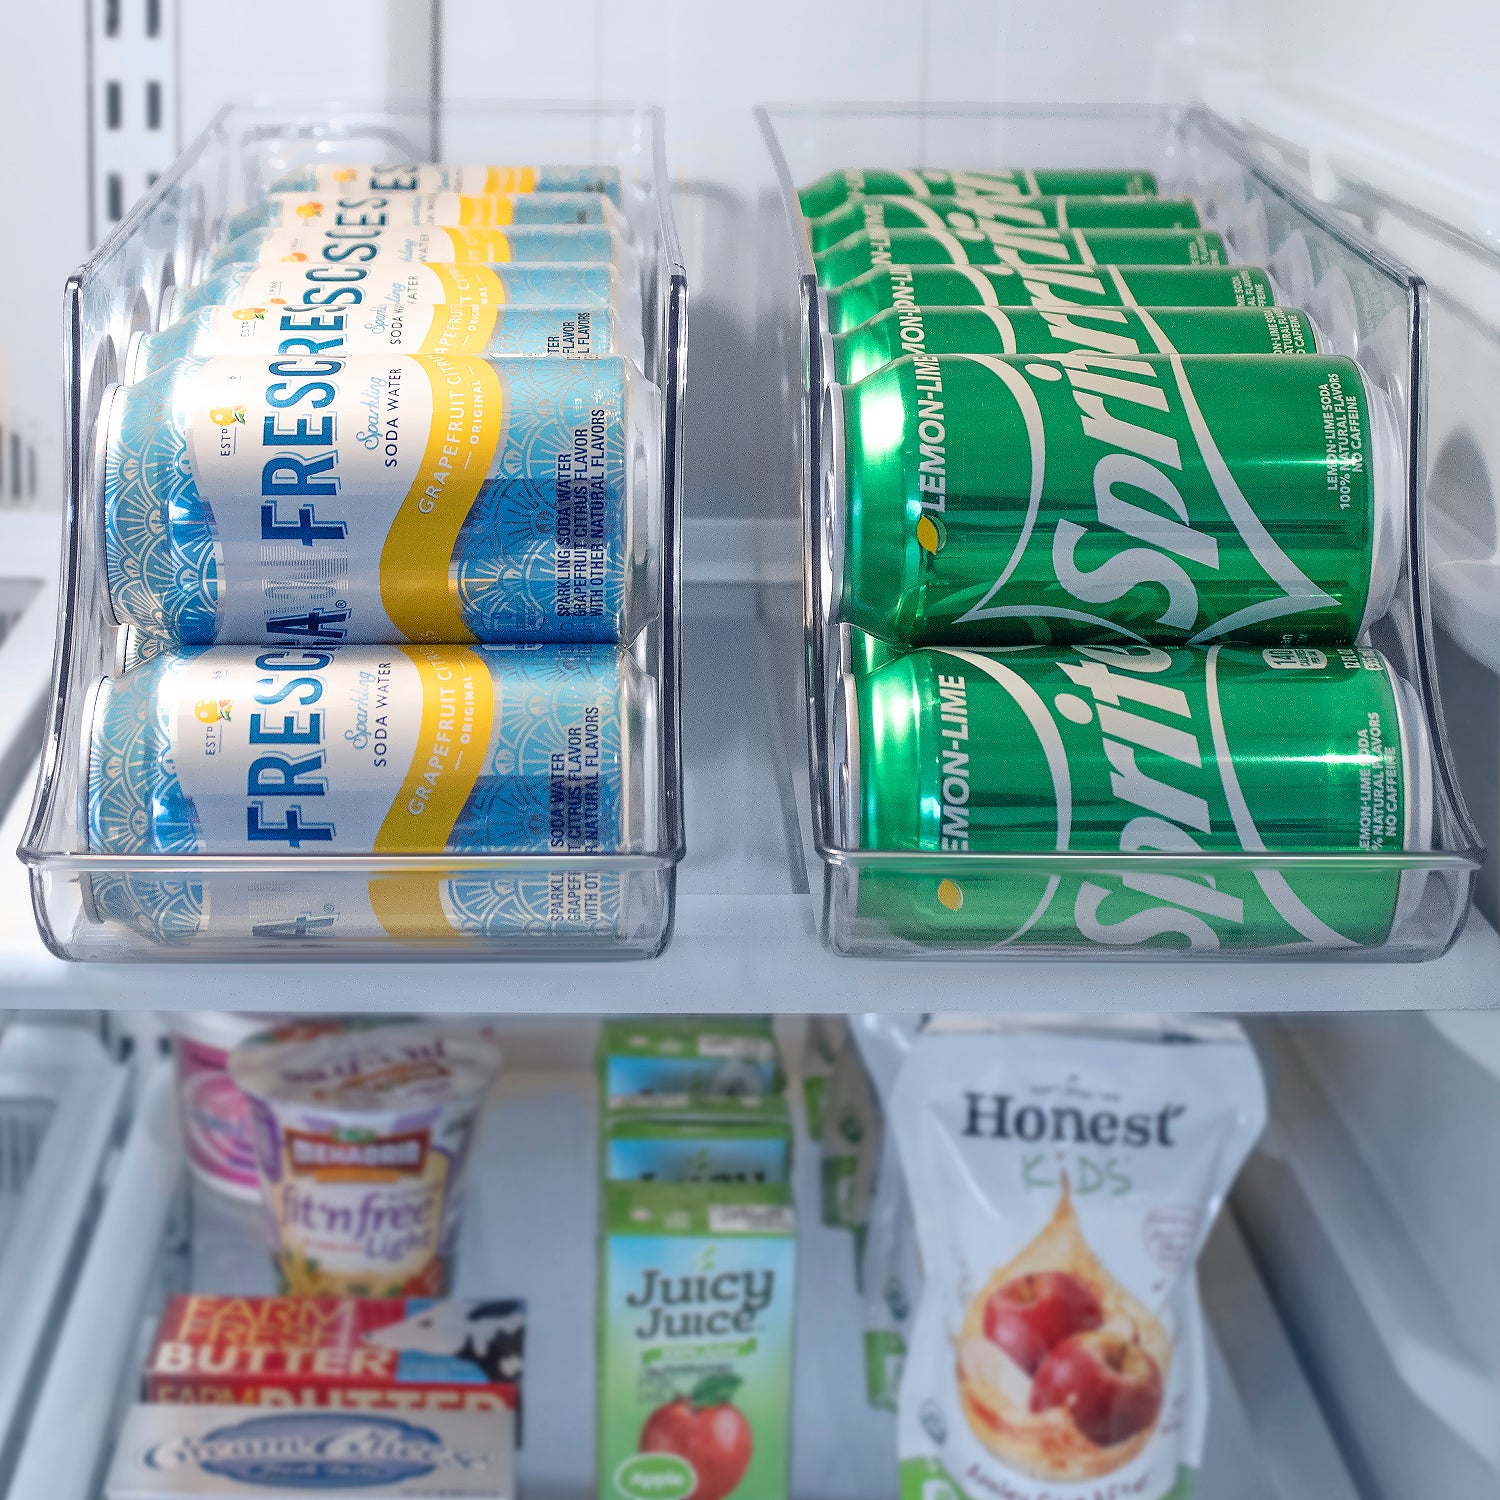 2 Packs 2-Tier Beverage Soda Can Storage Organizer Rolling Fridge